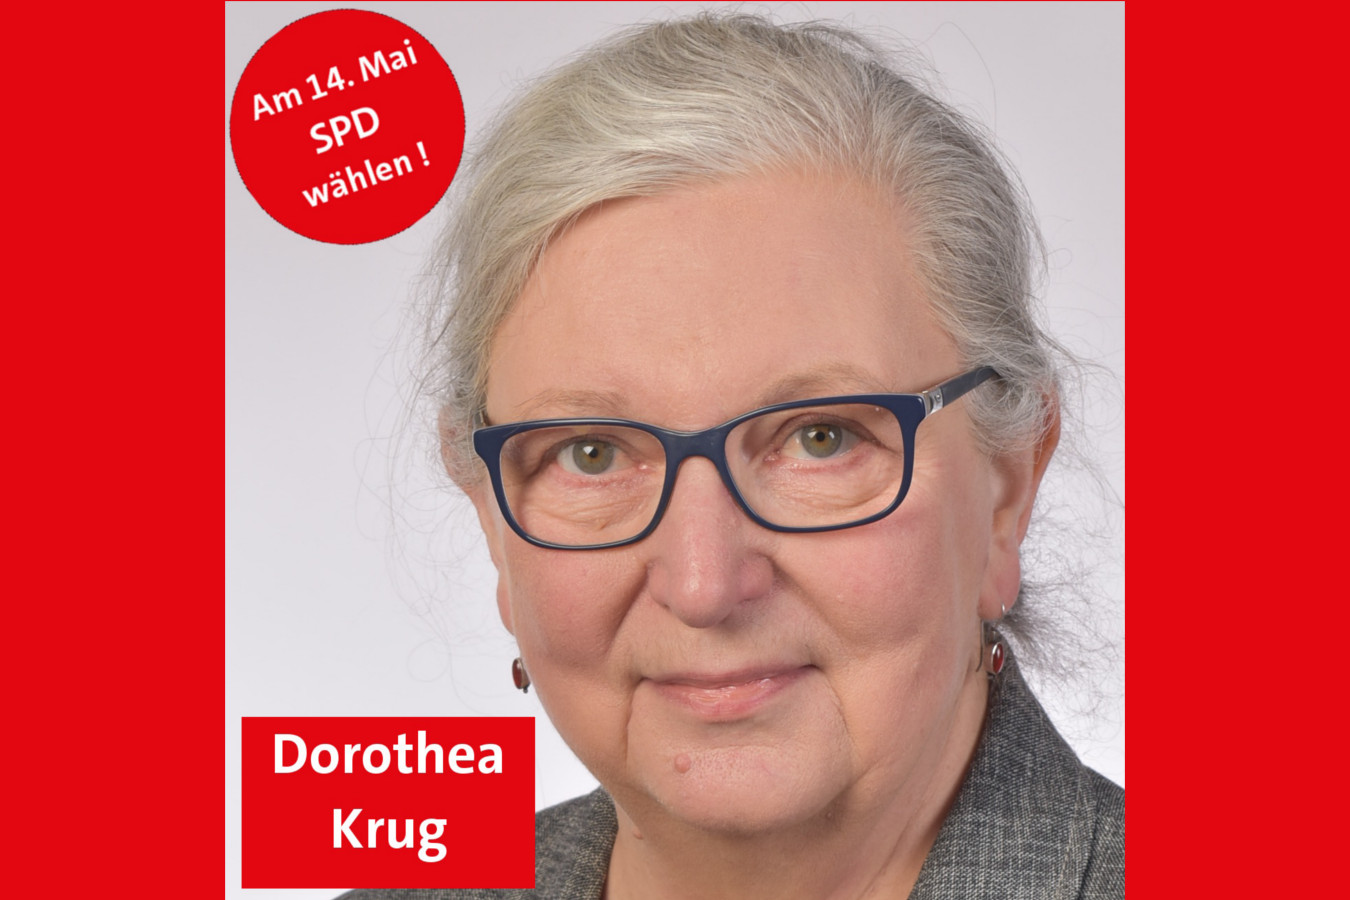 Dorothea Krug